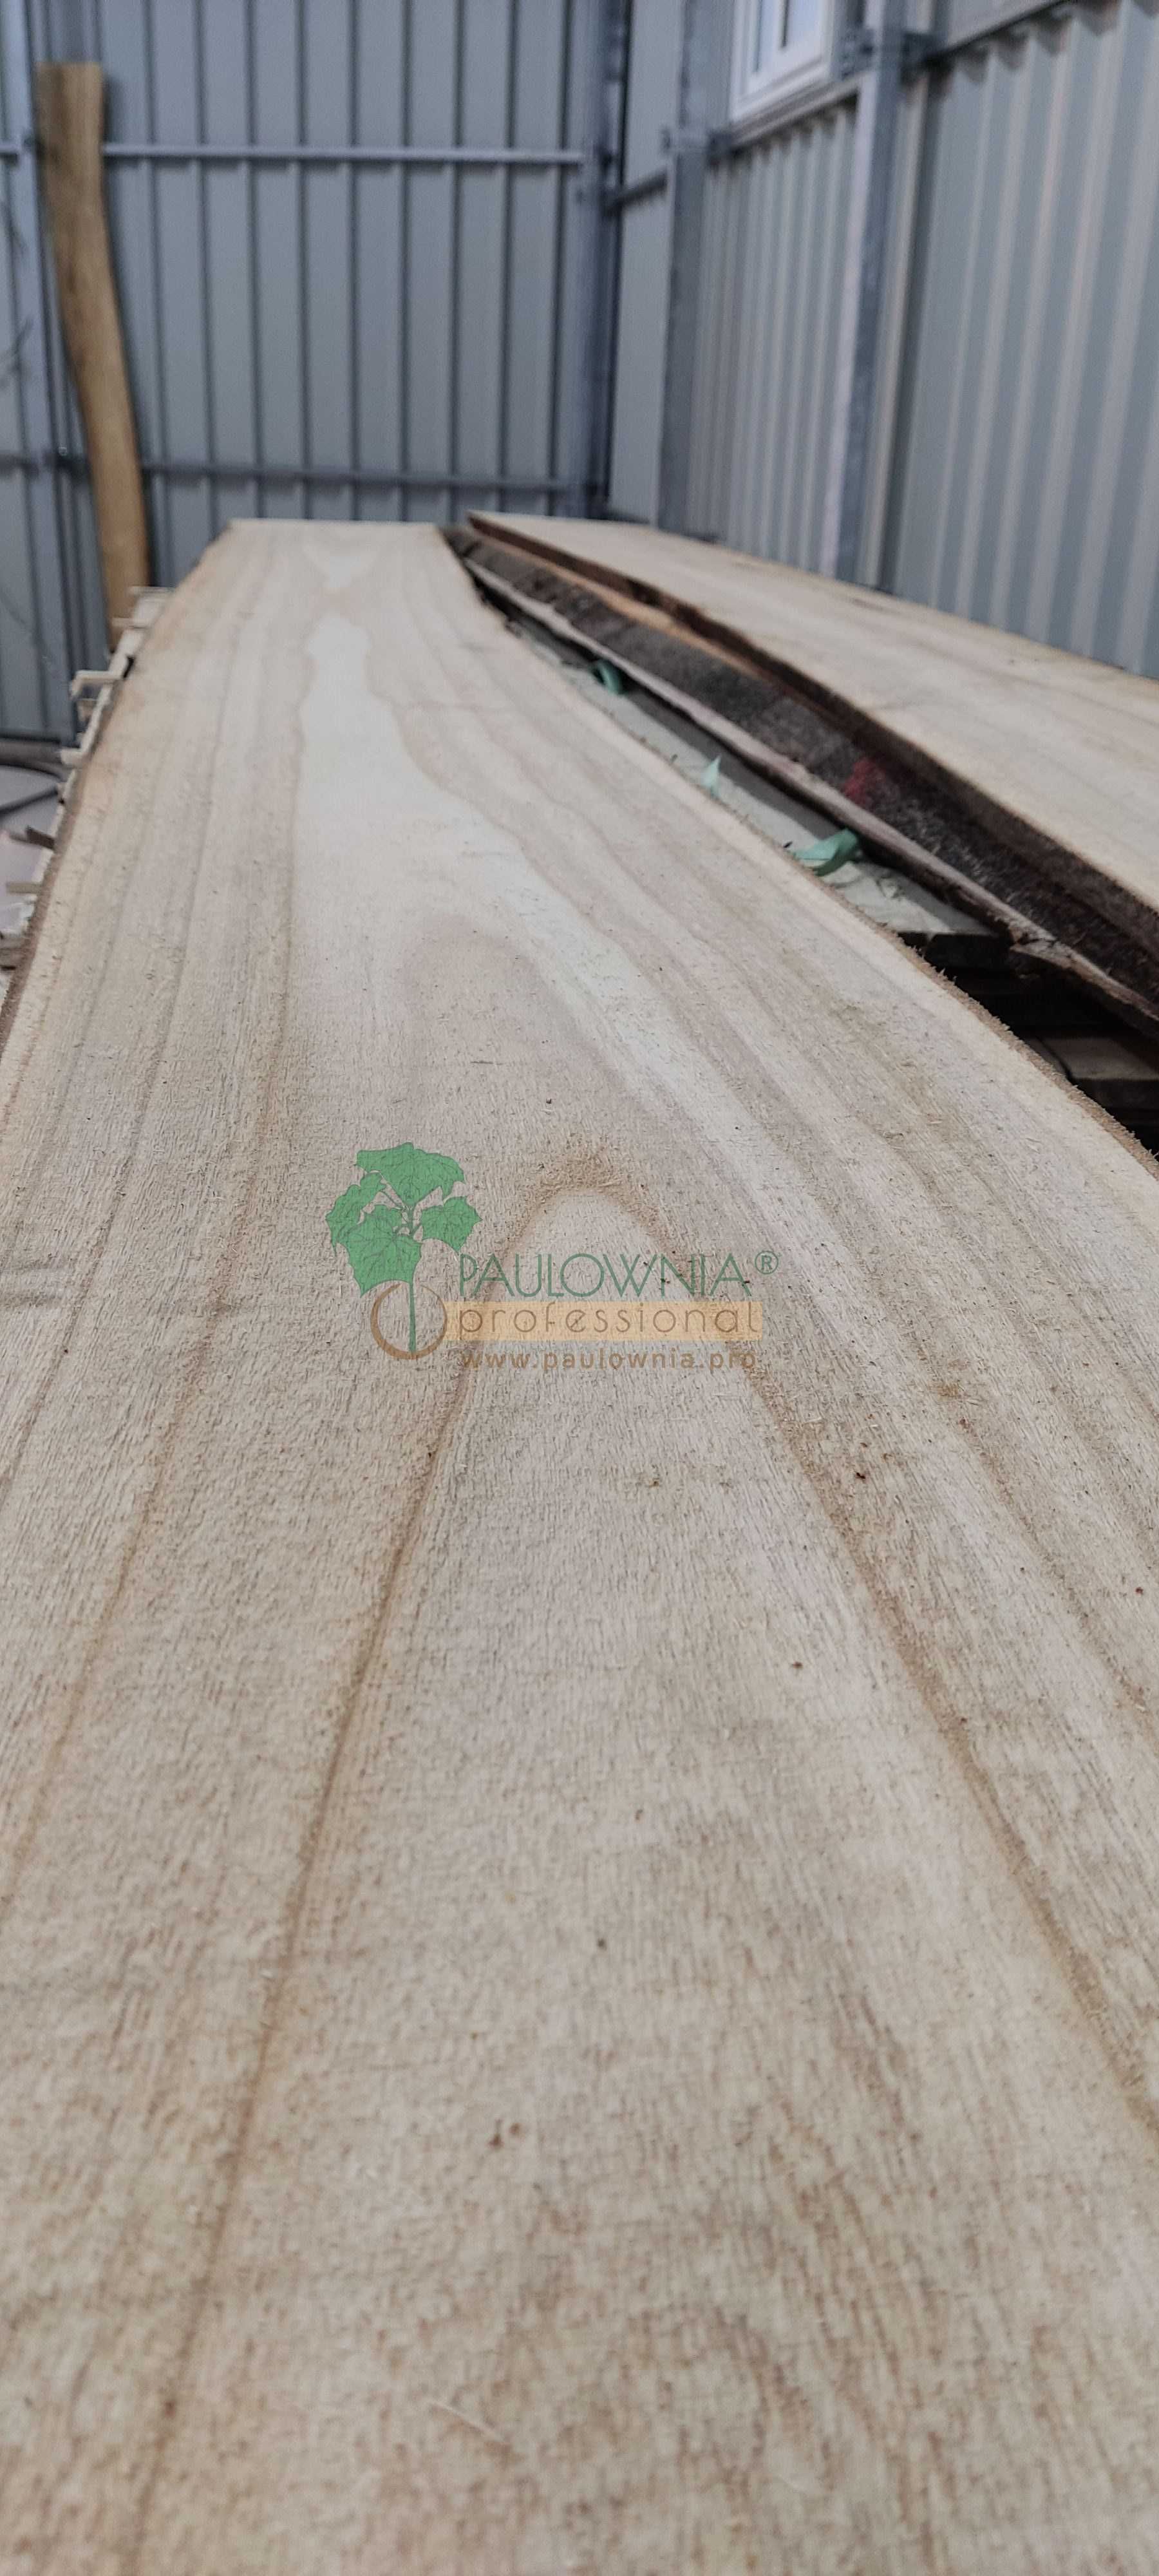 Tábuas de madeira de Paulownia